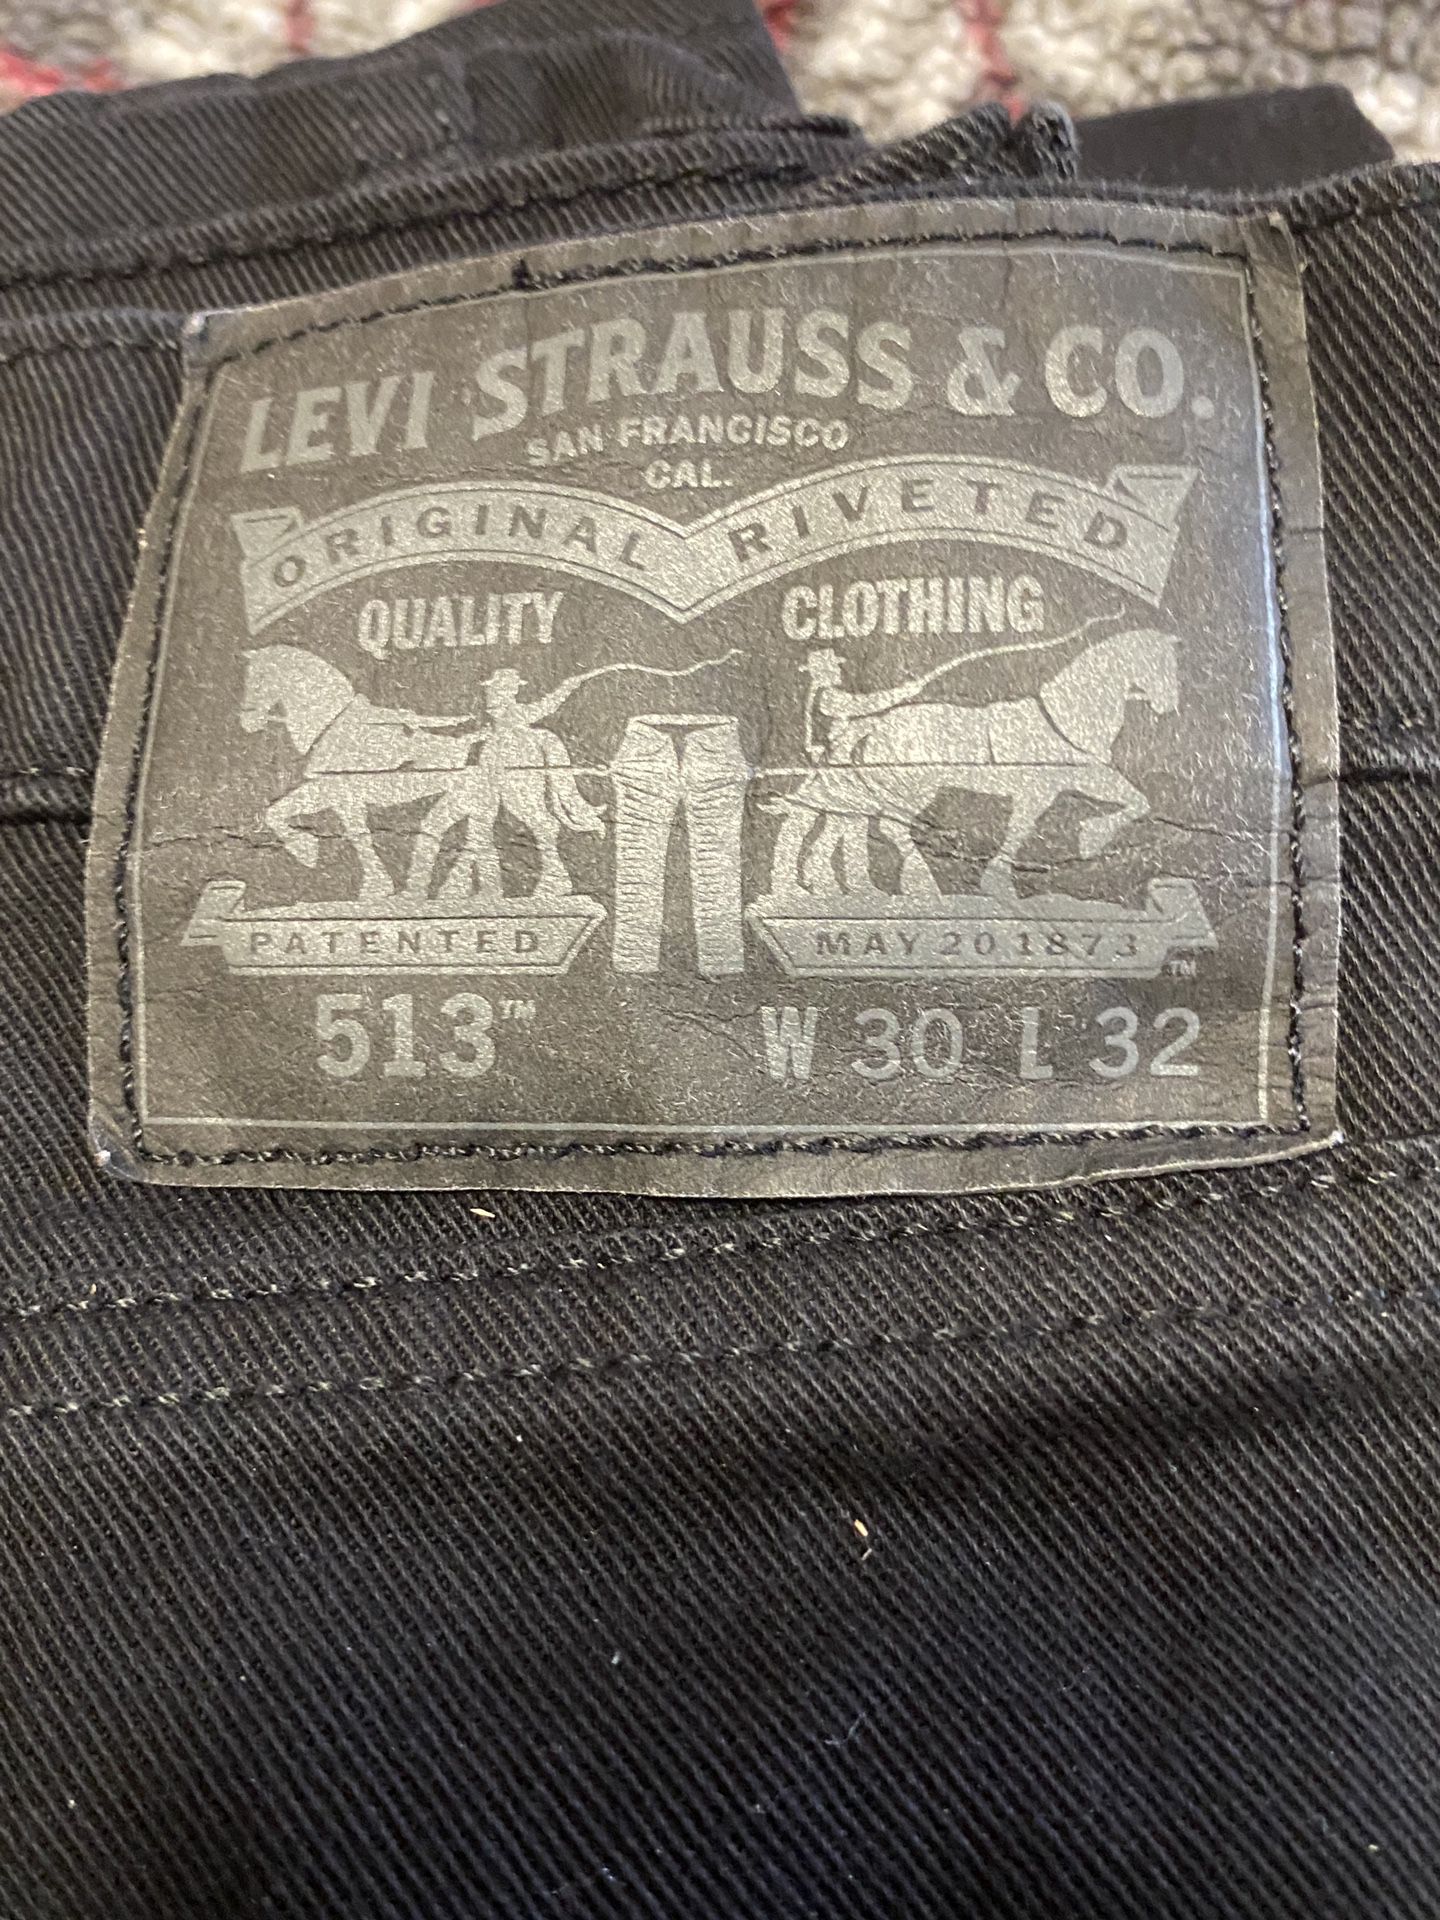 Levi jeans $10 ( 513 ) W 30 L 32